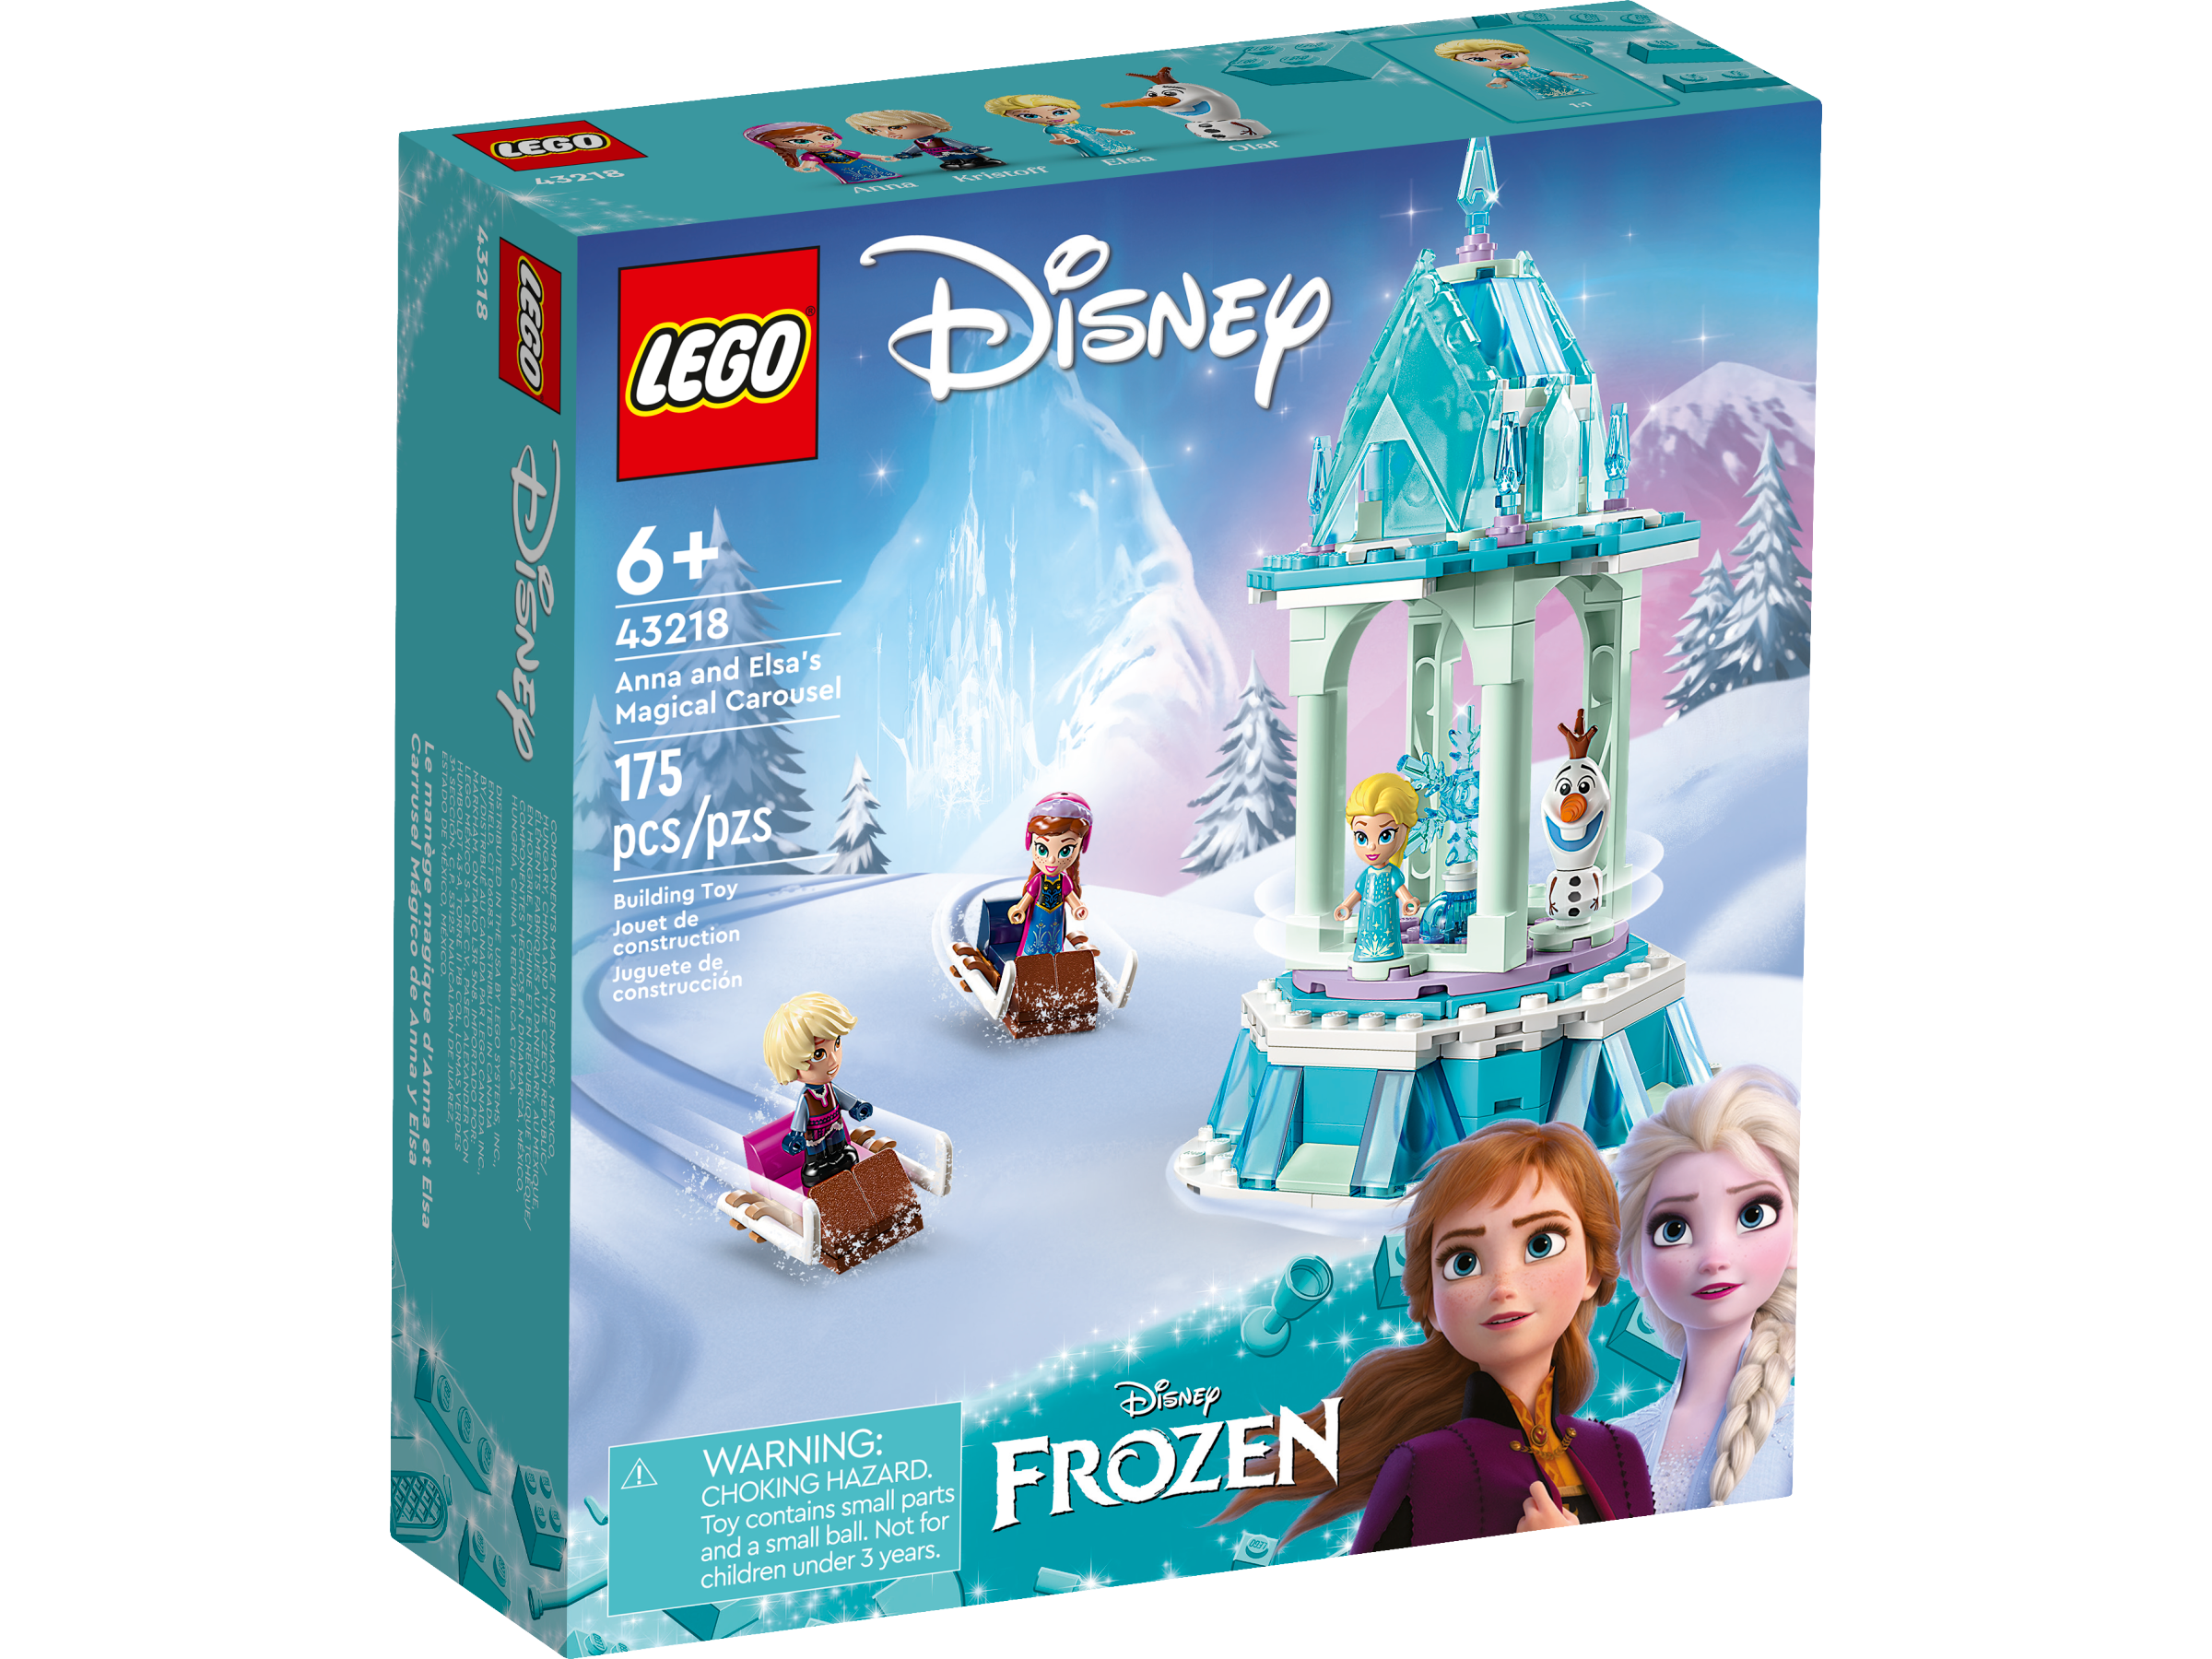 Anna and Elsa's Magical Carousel 43218, Disney™